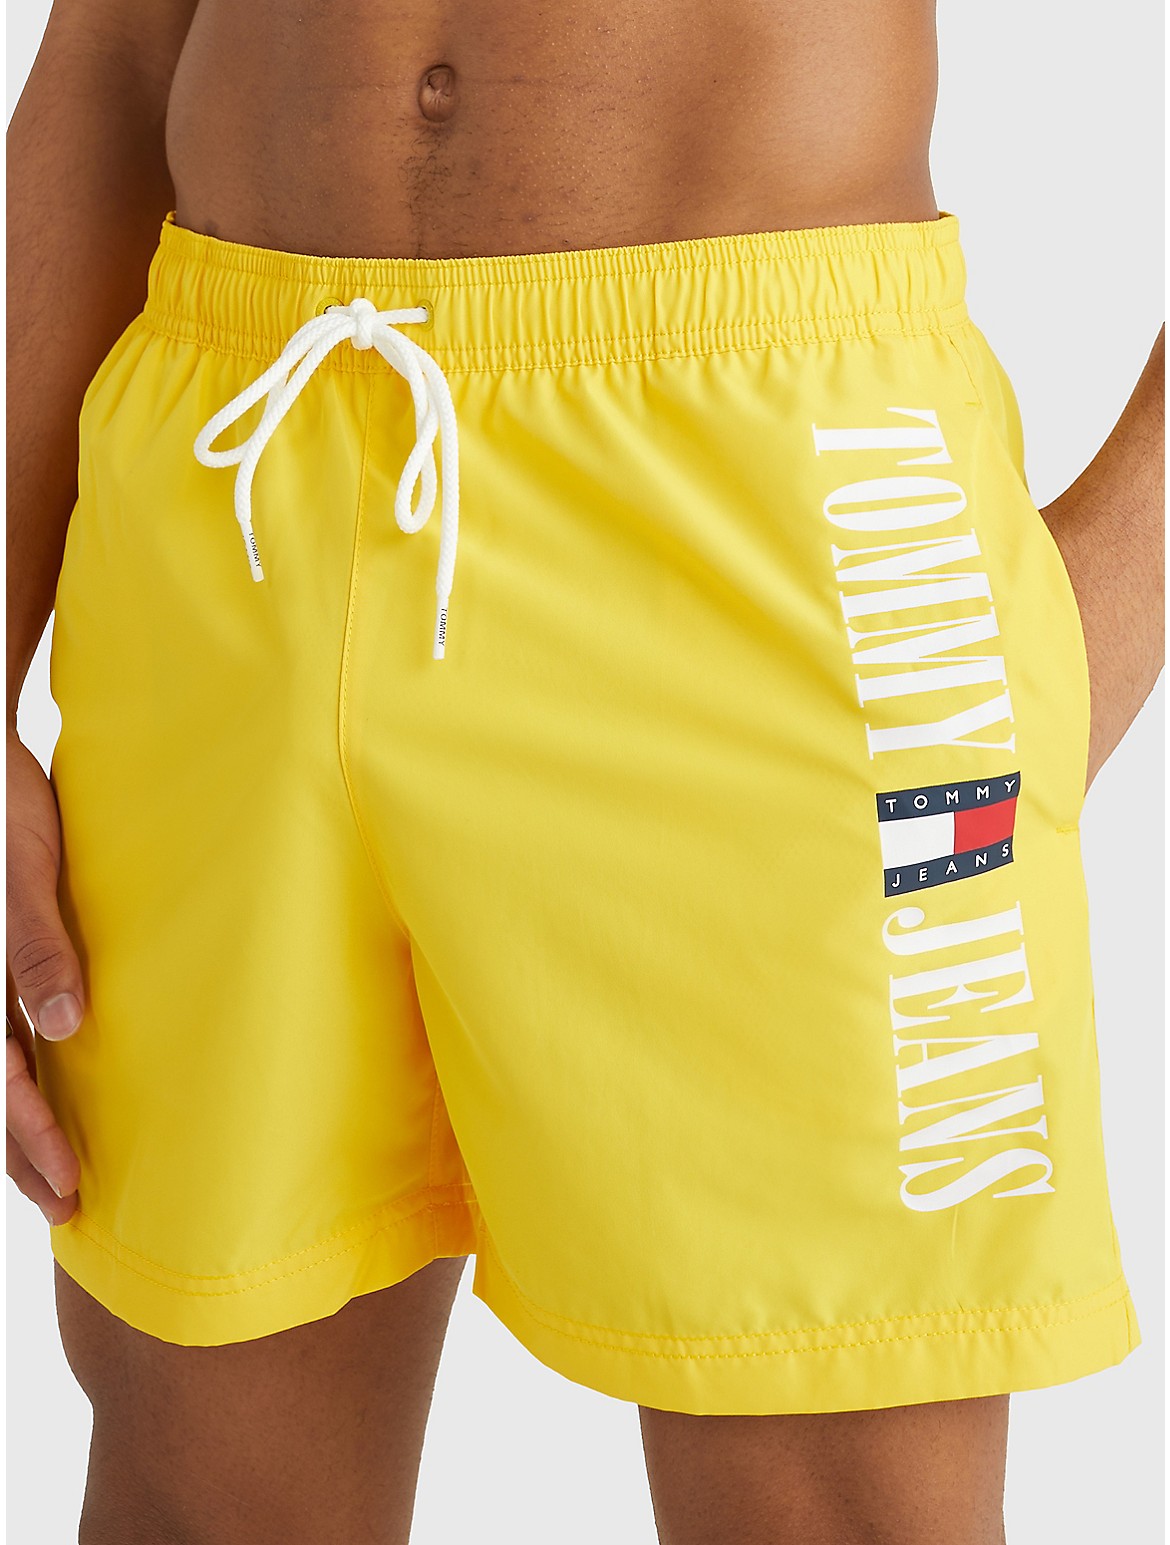 Tommy Hilfiger Men's Logo Print 7" Swim Trunk - Yellow - L